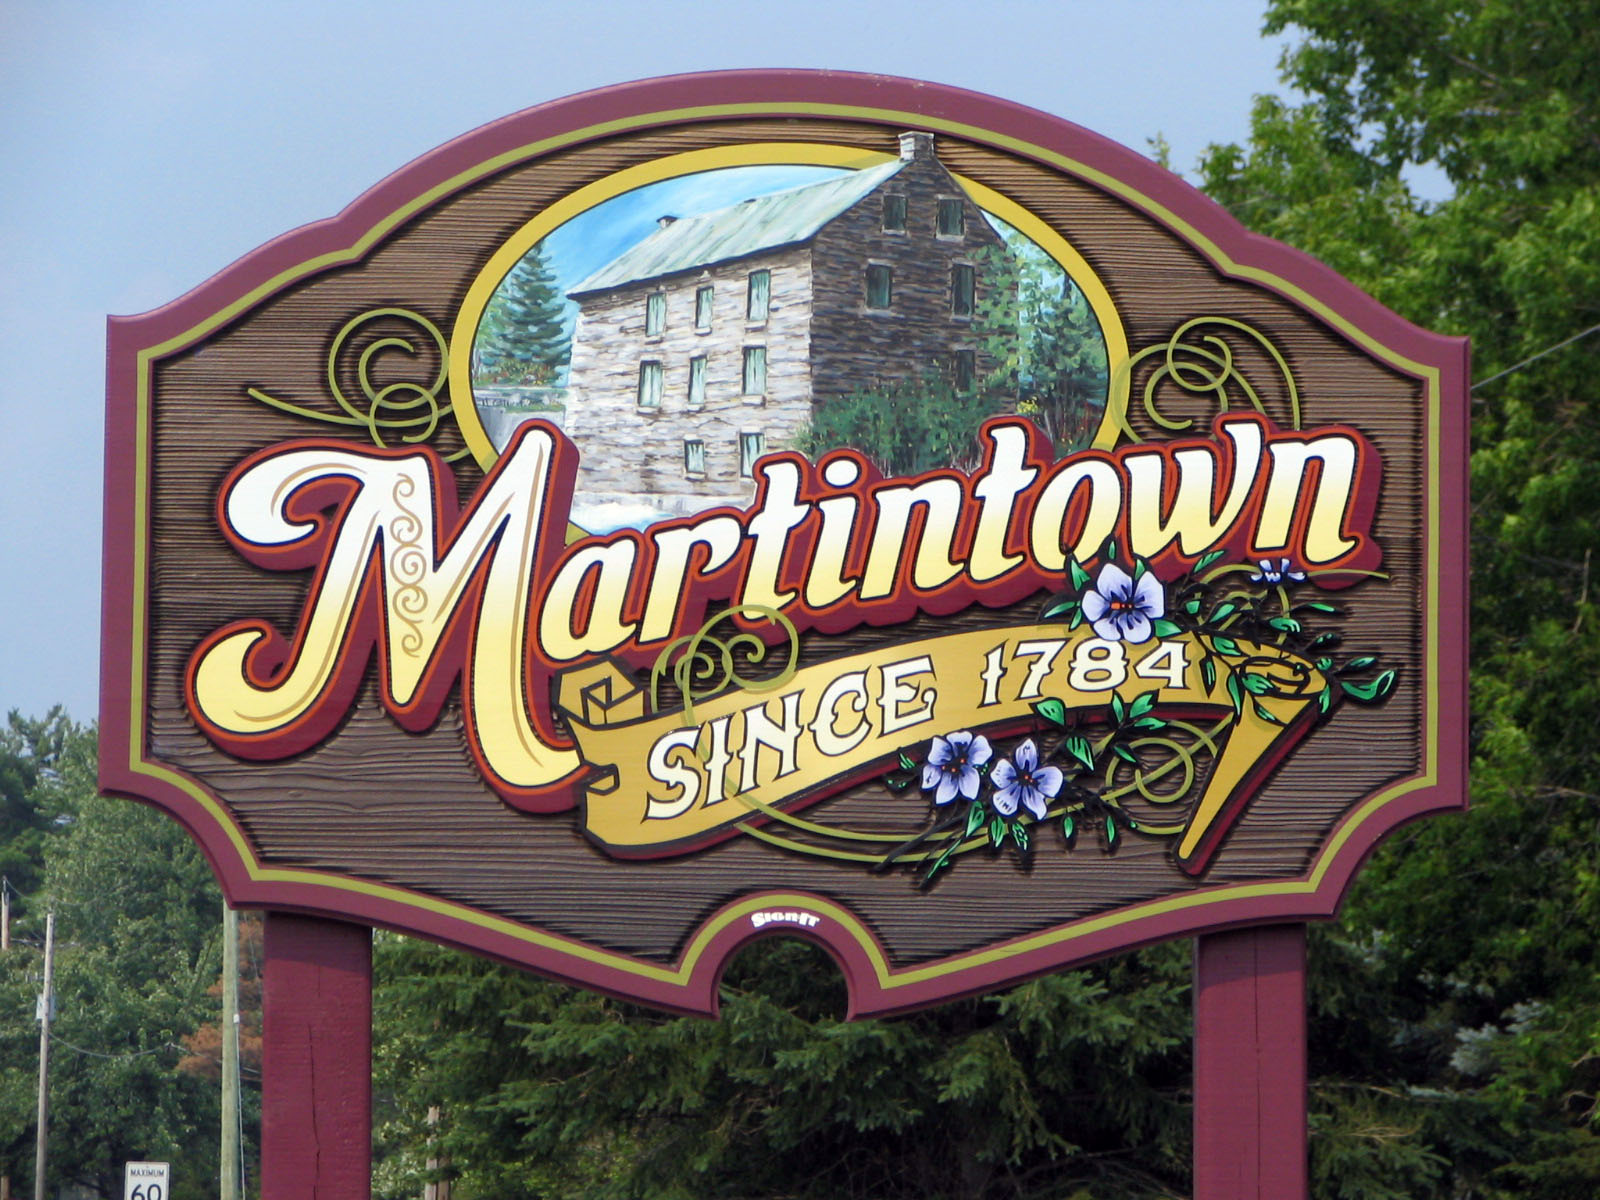 Martintown.jpg